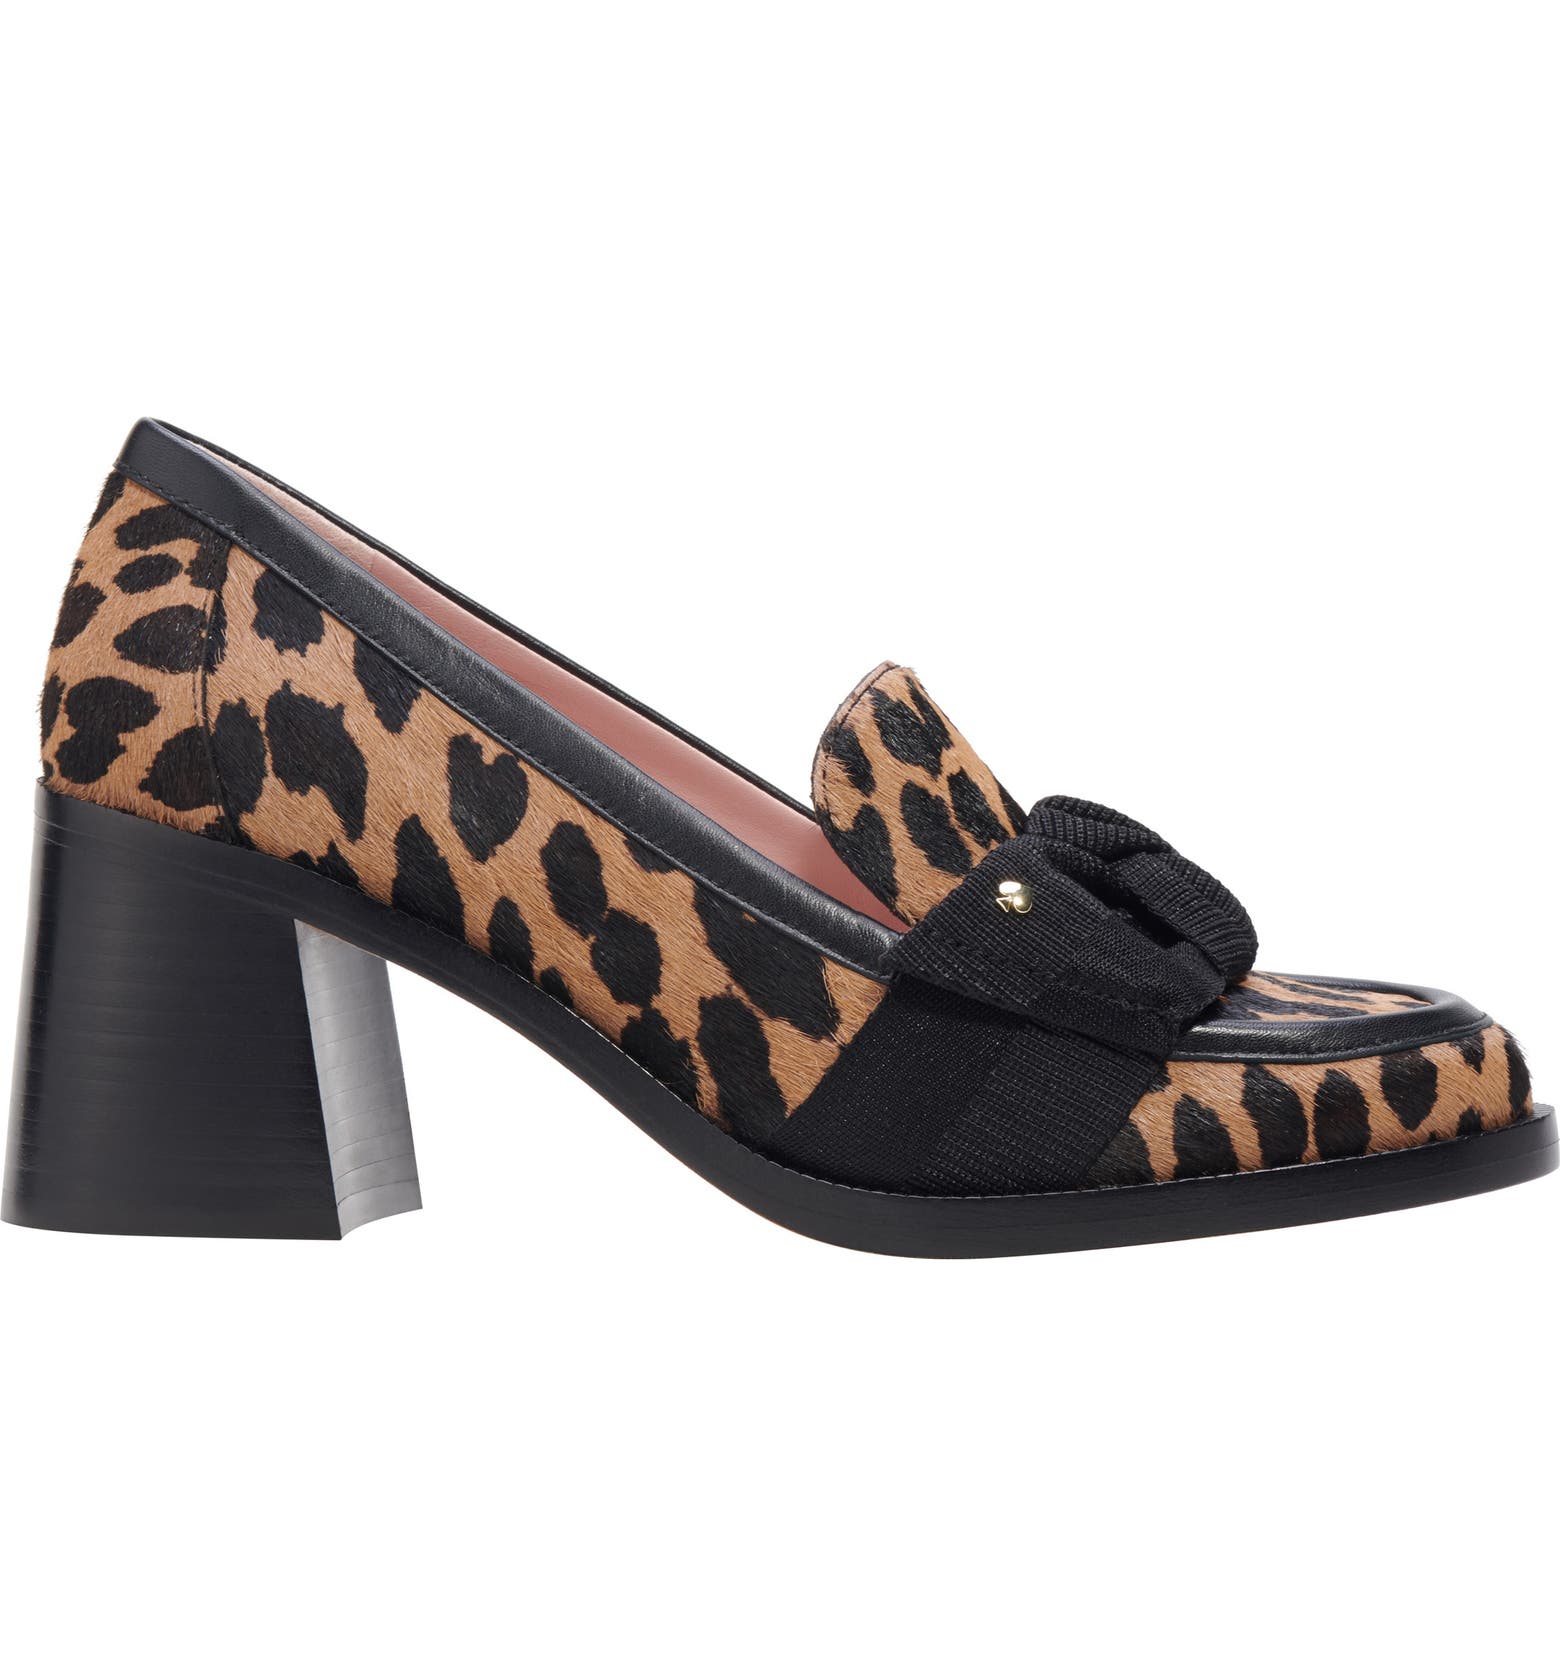 kate spade new york leandra block heel loafer (Women) | Nordstrom